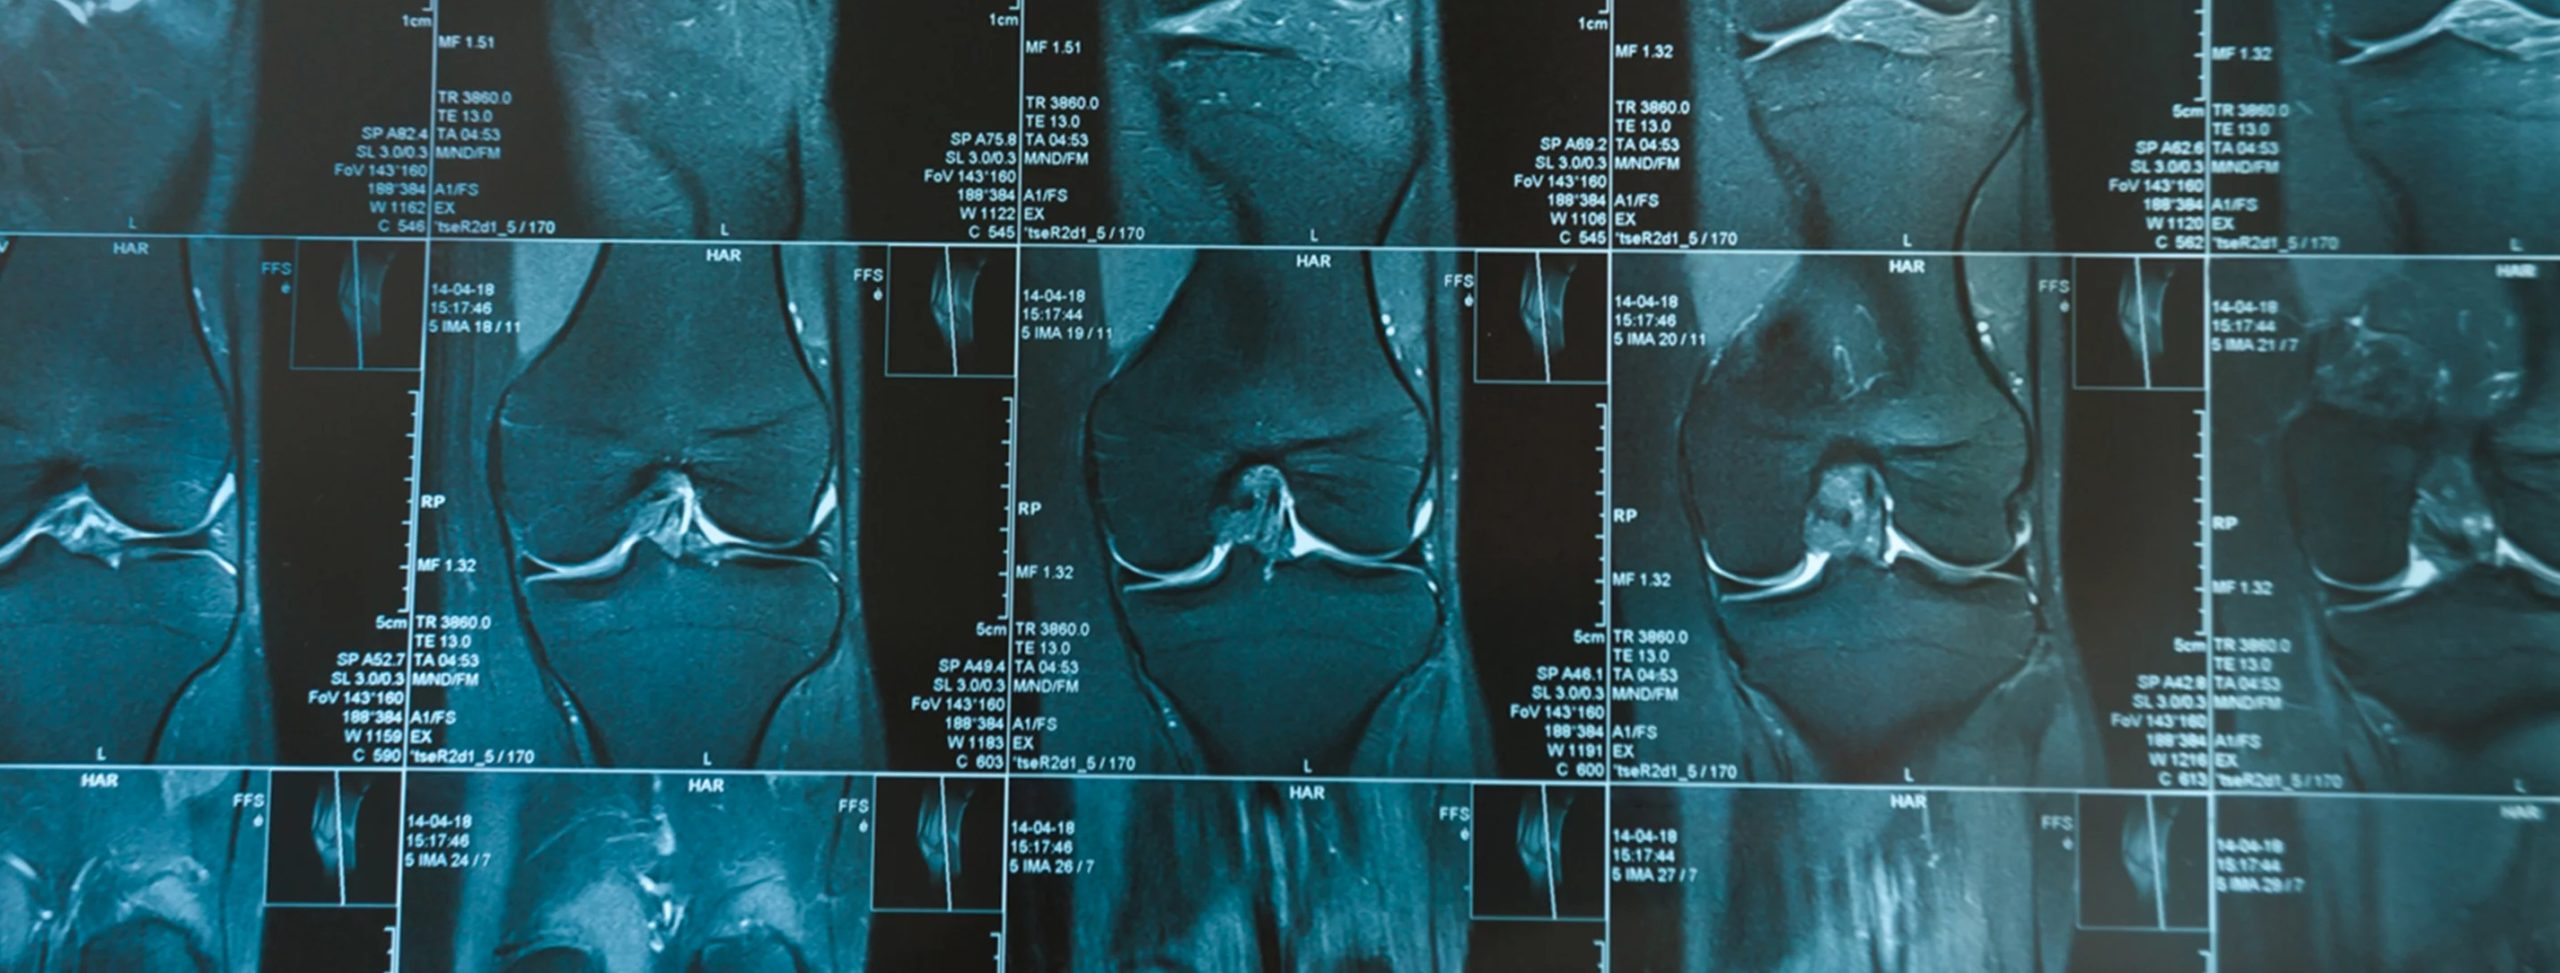 Prevalenza di alterazioni strutturali in ginocchia asintomatiche